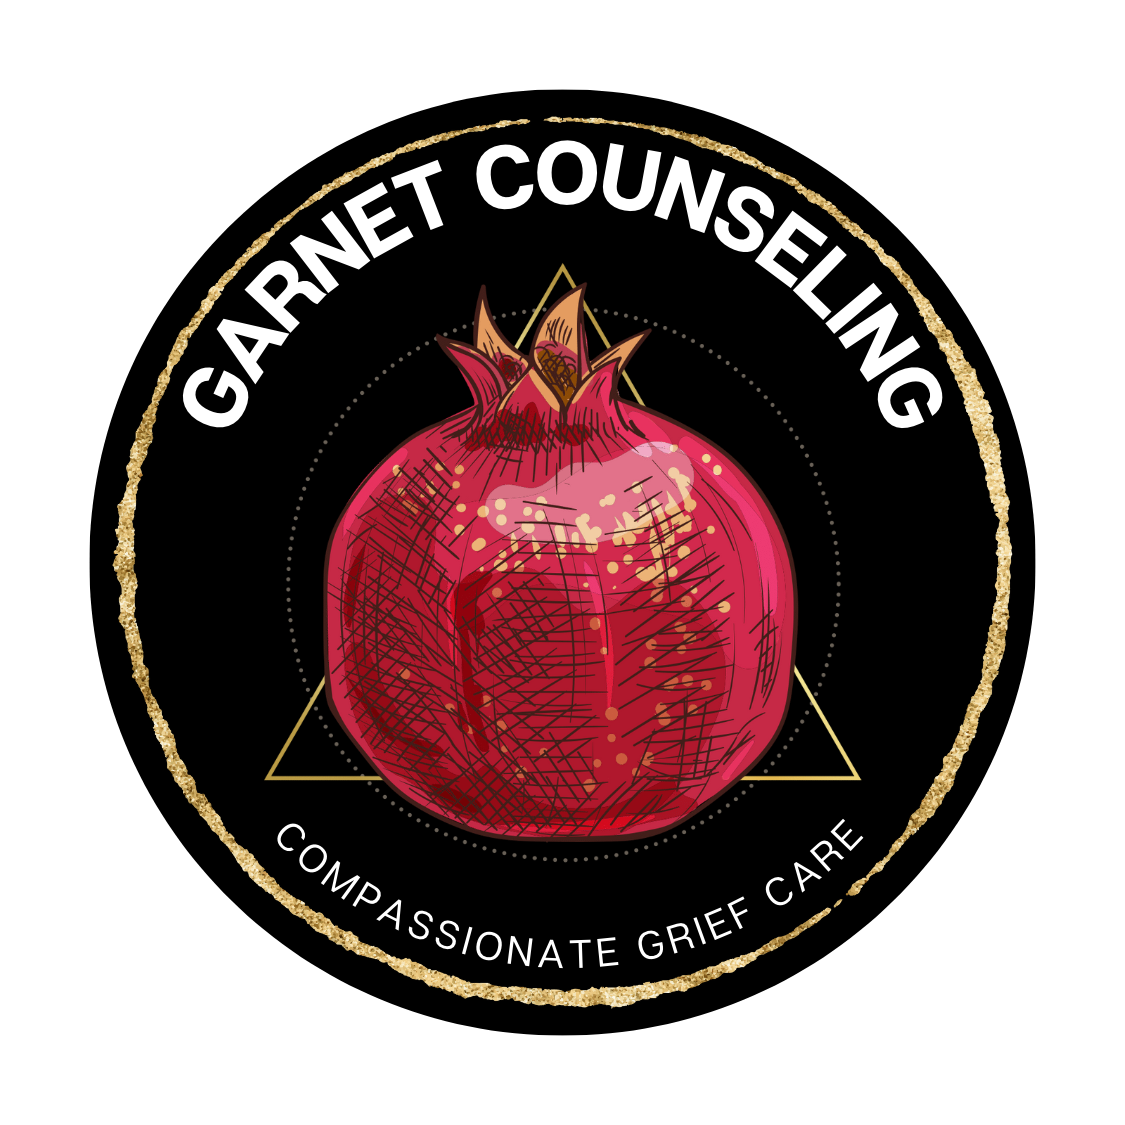 Garnet Counseling